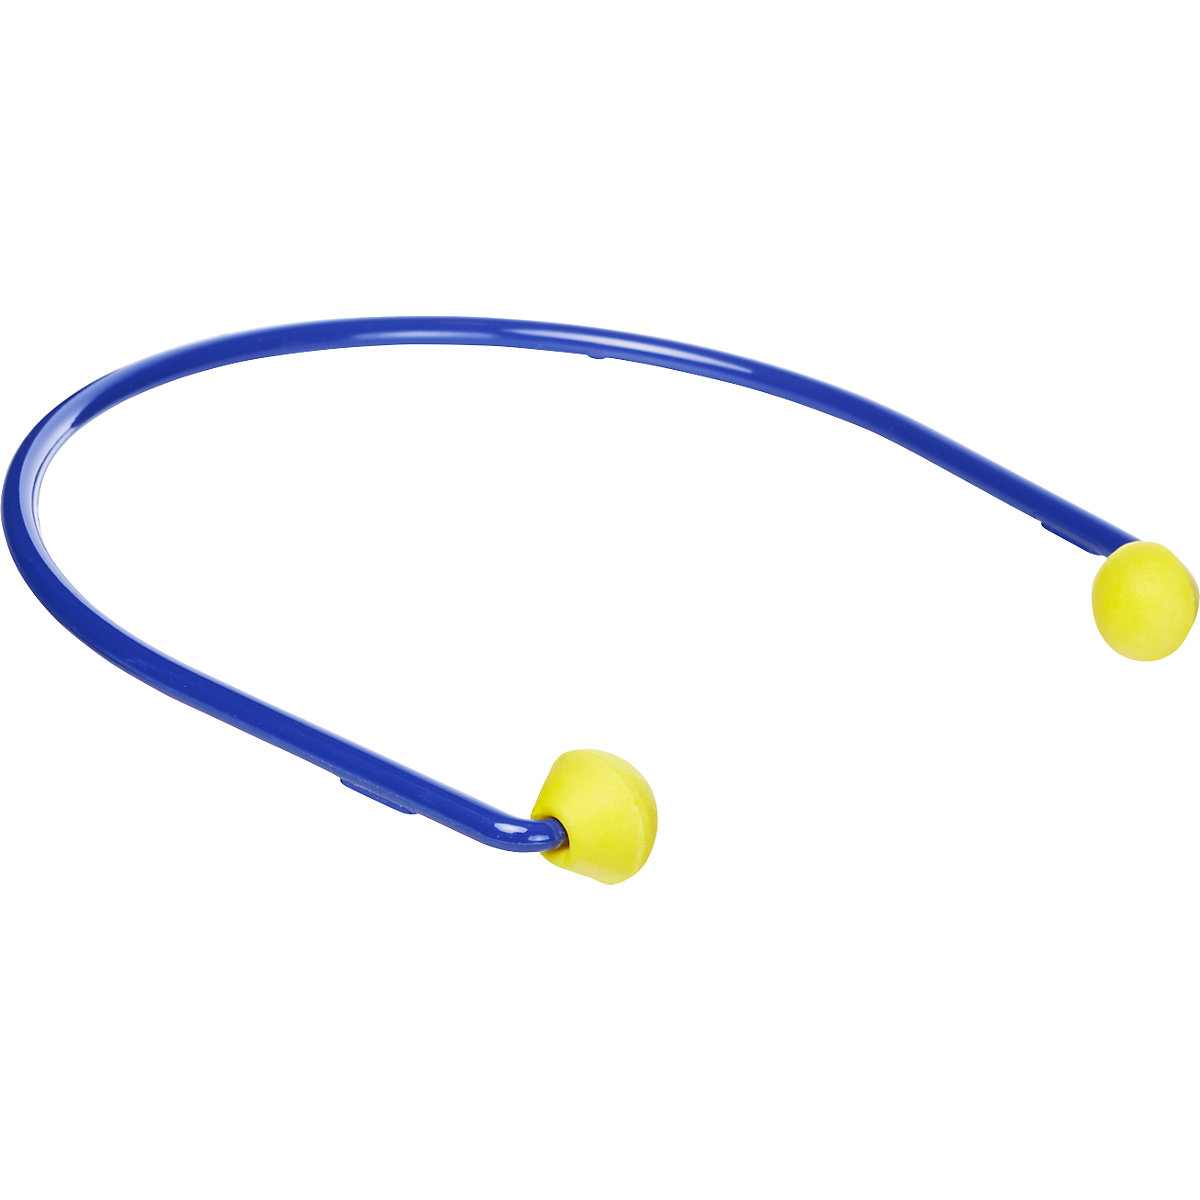 Arco de protección auditiva E-A-Rcaps™ – 3M (Imagen del producto 2)-1